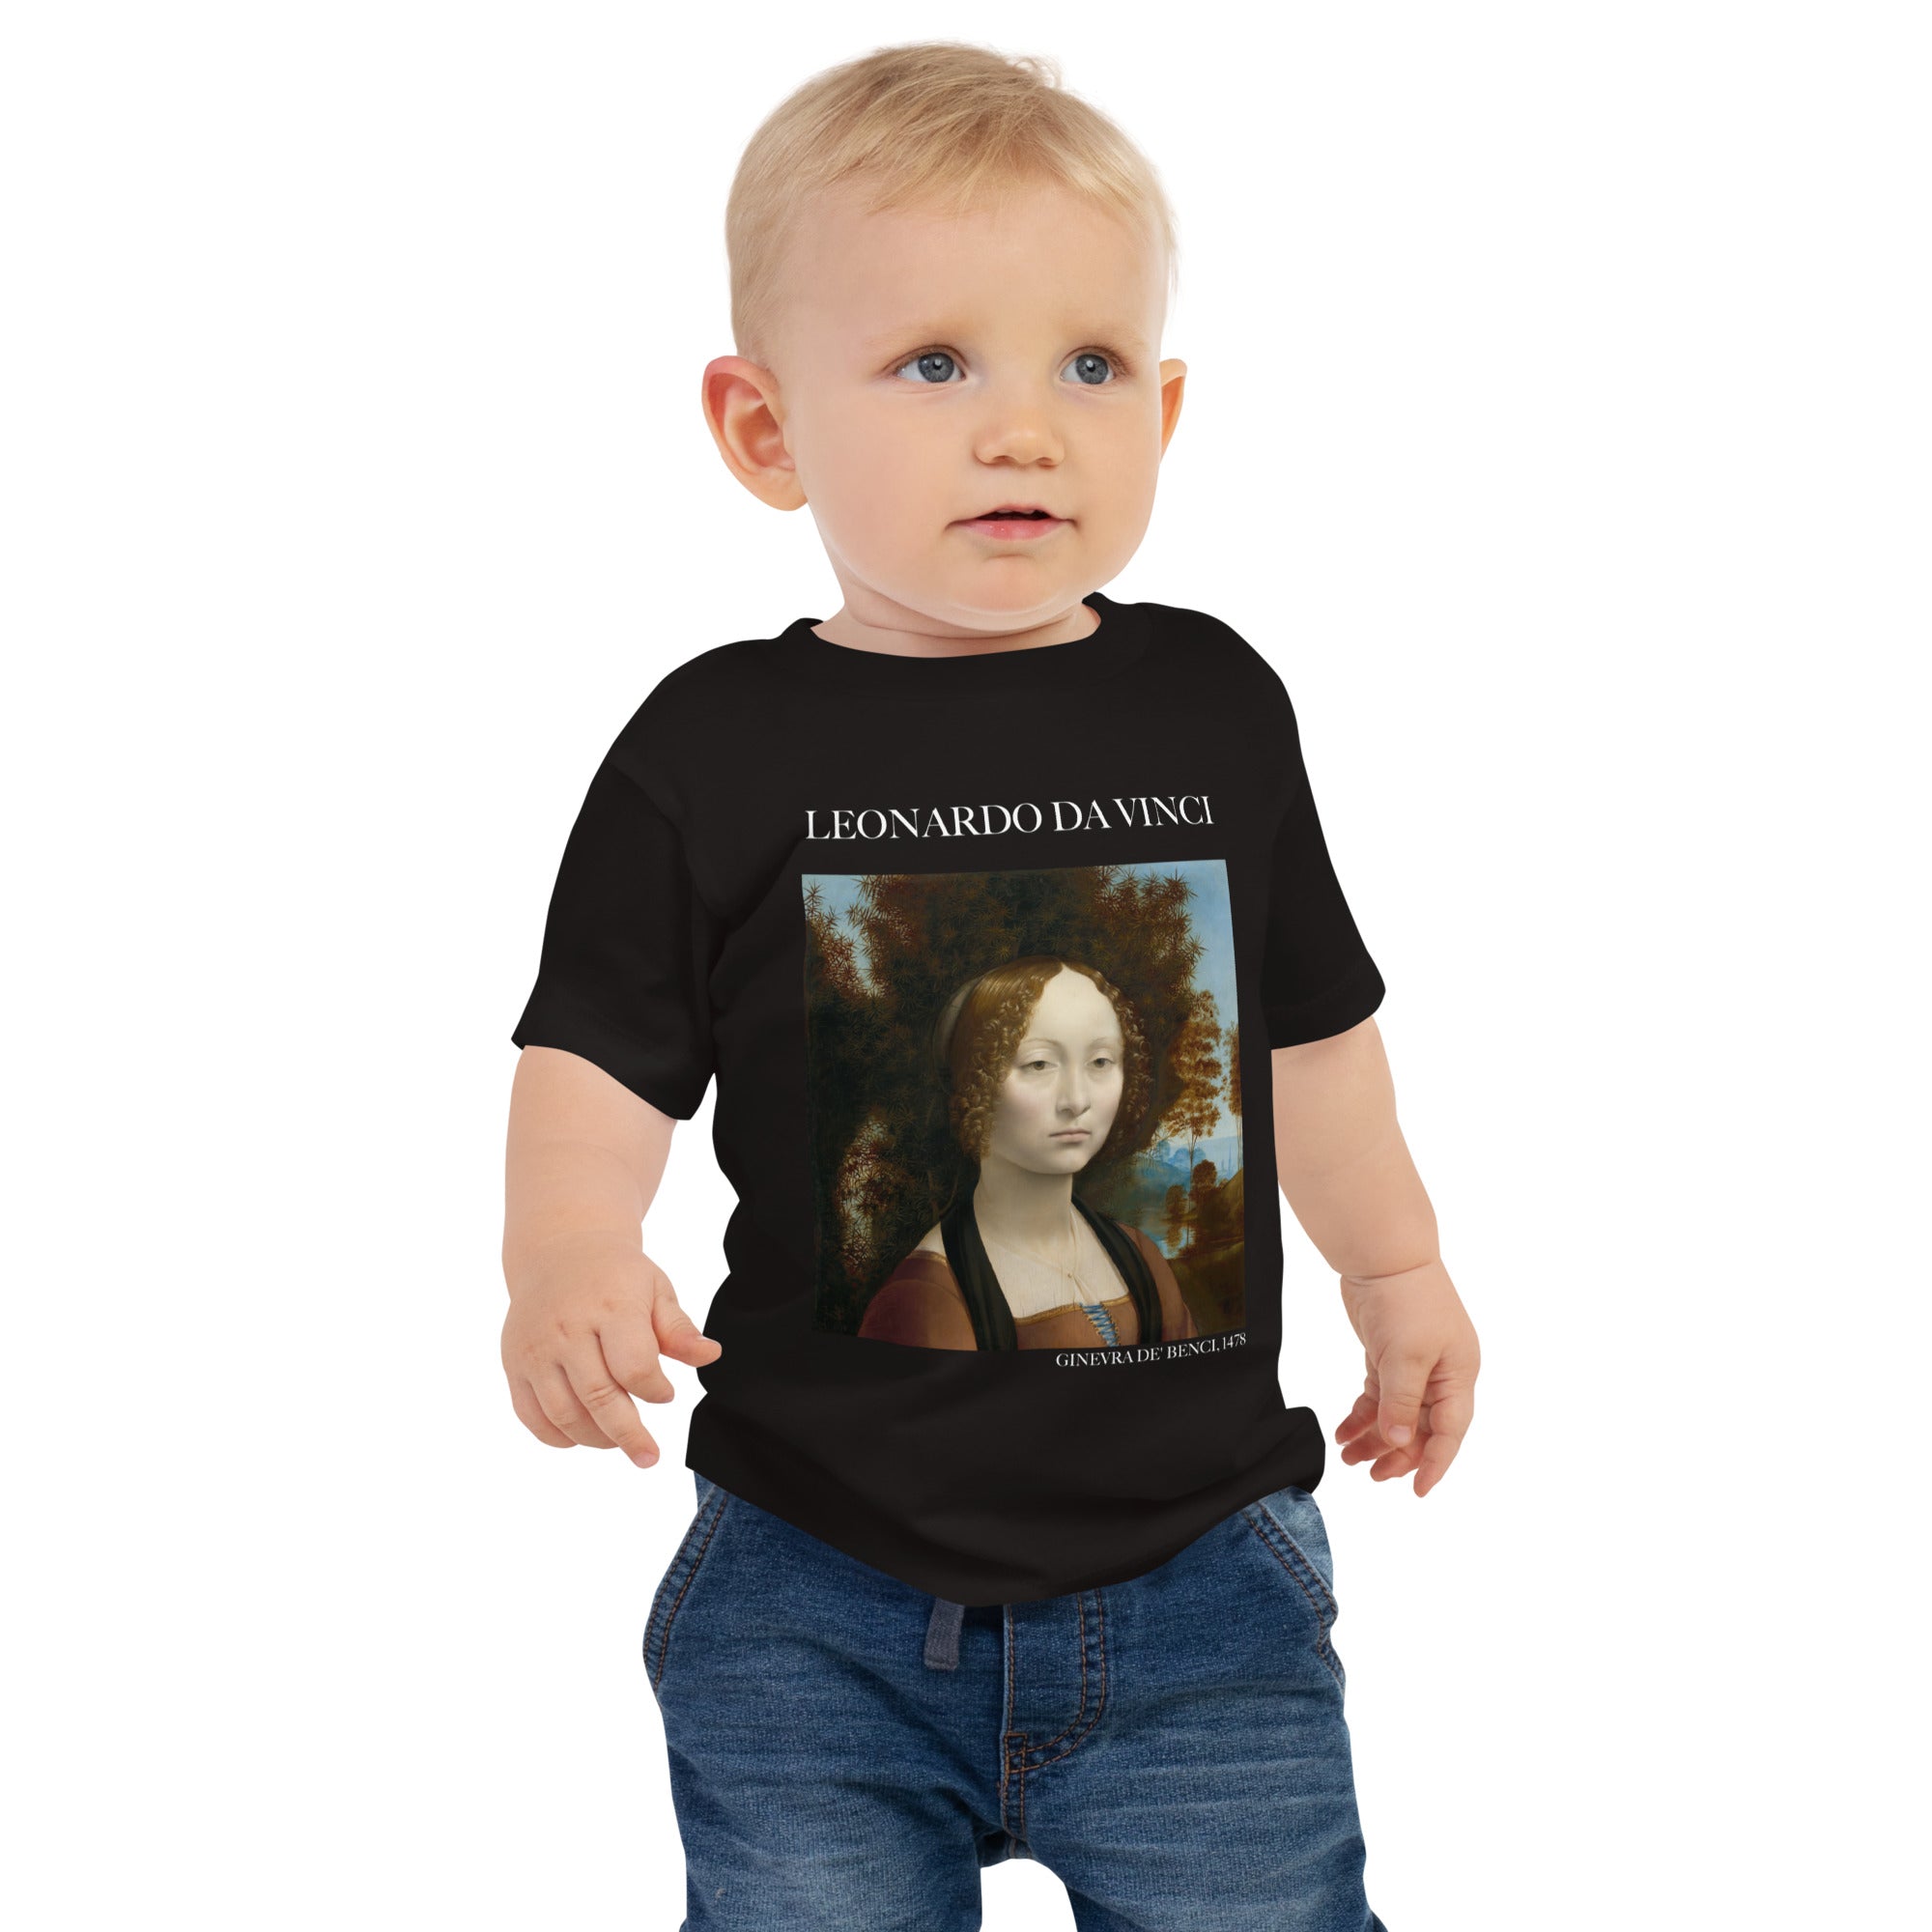 Leonardo da Vinci 'Ginevra de' Benci' Berühmtes Gemälde Baby-T-Shirt | Premium Baby Art T-Shirt